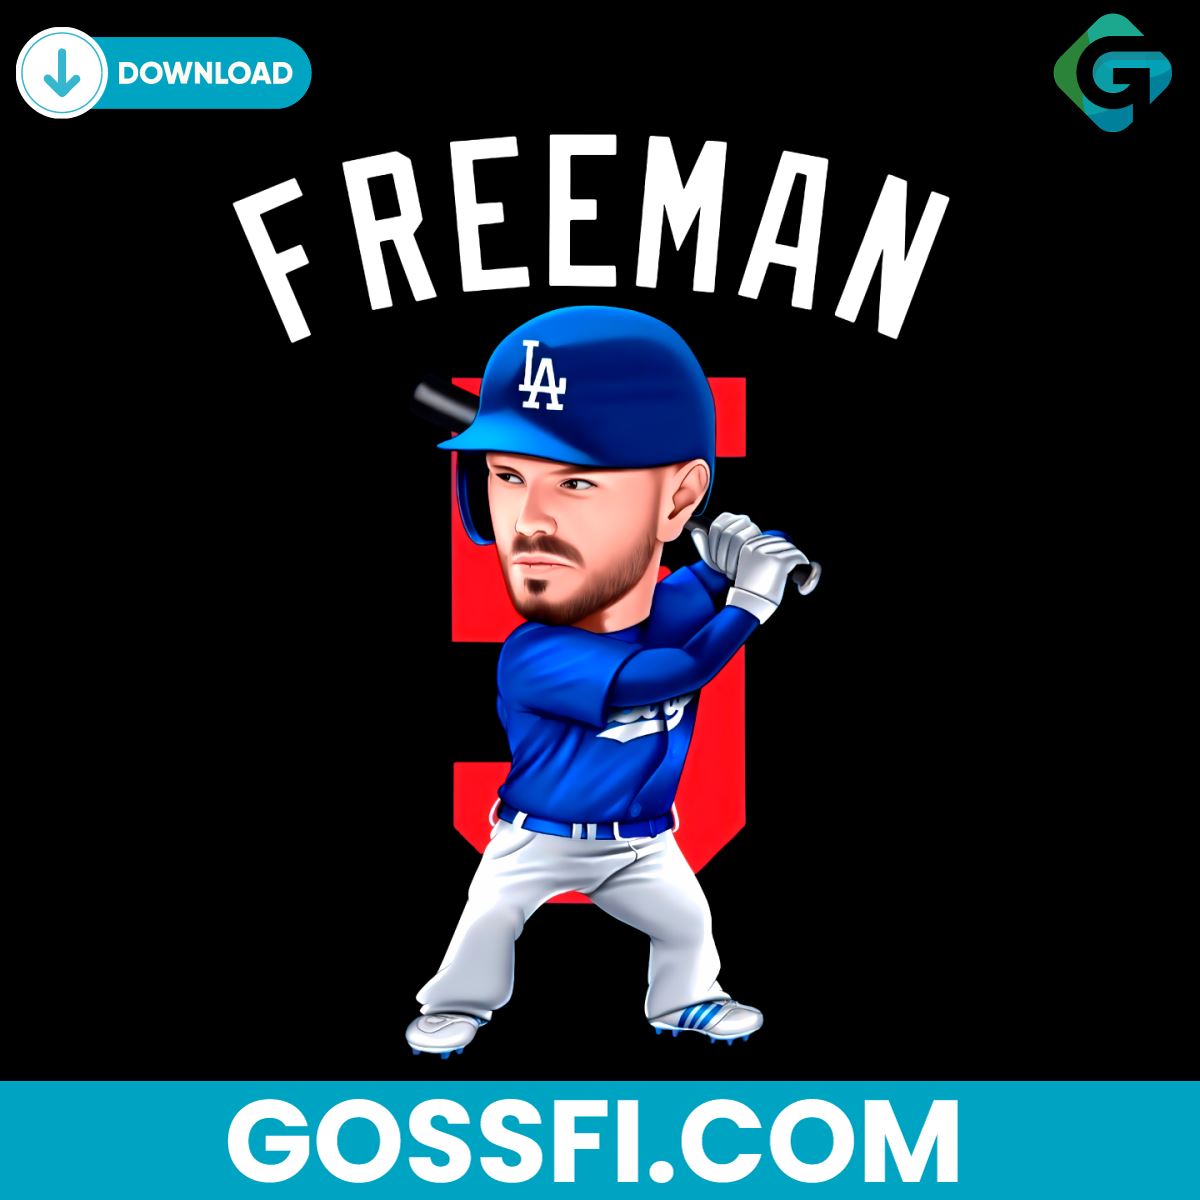 freeman-los-angeles-dodgers-baseball-player-png